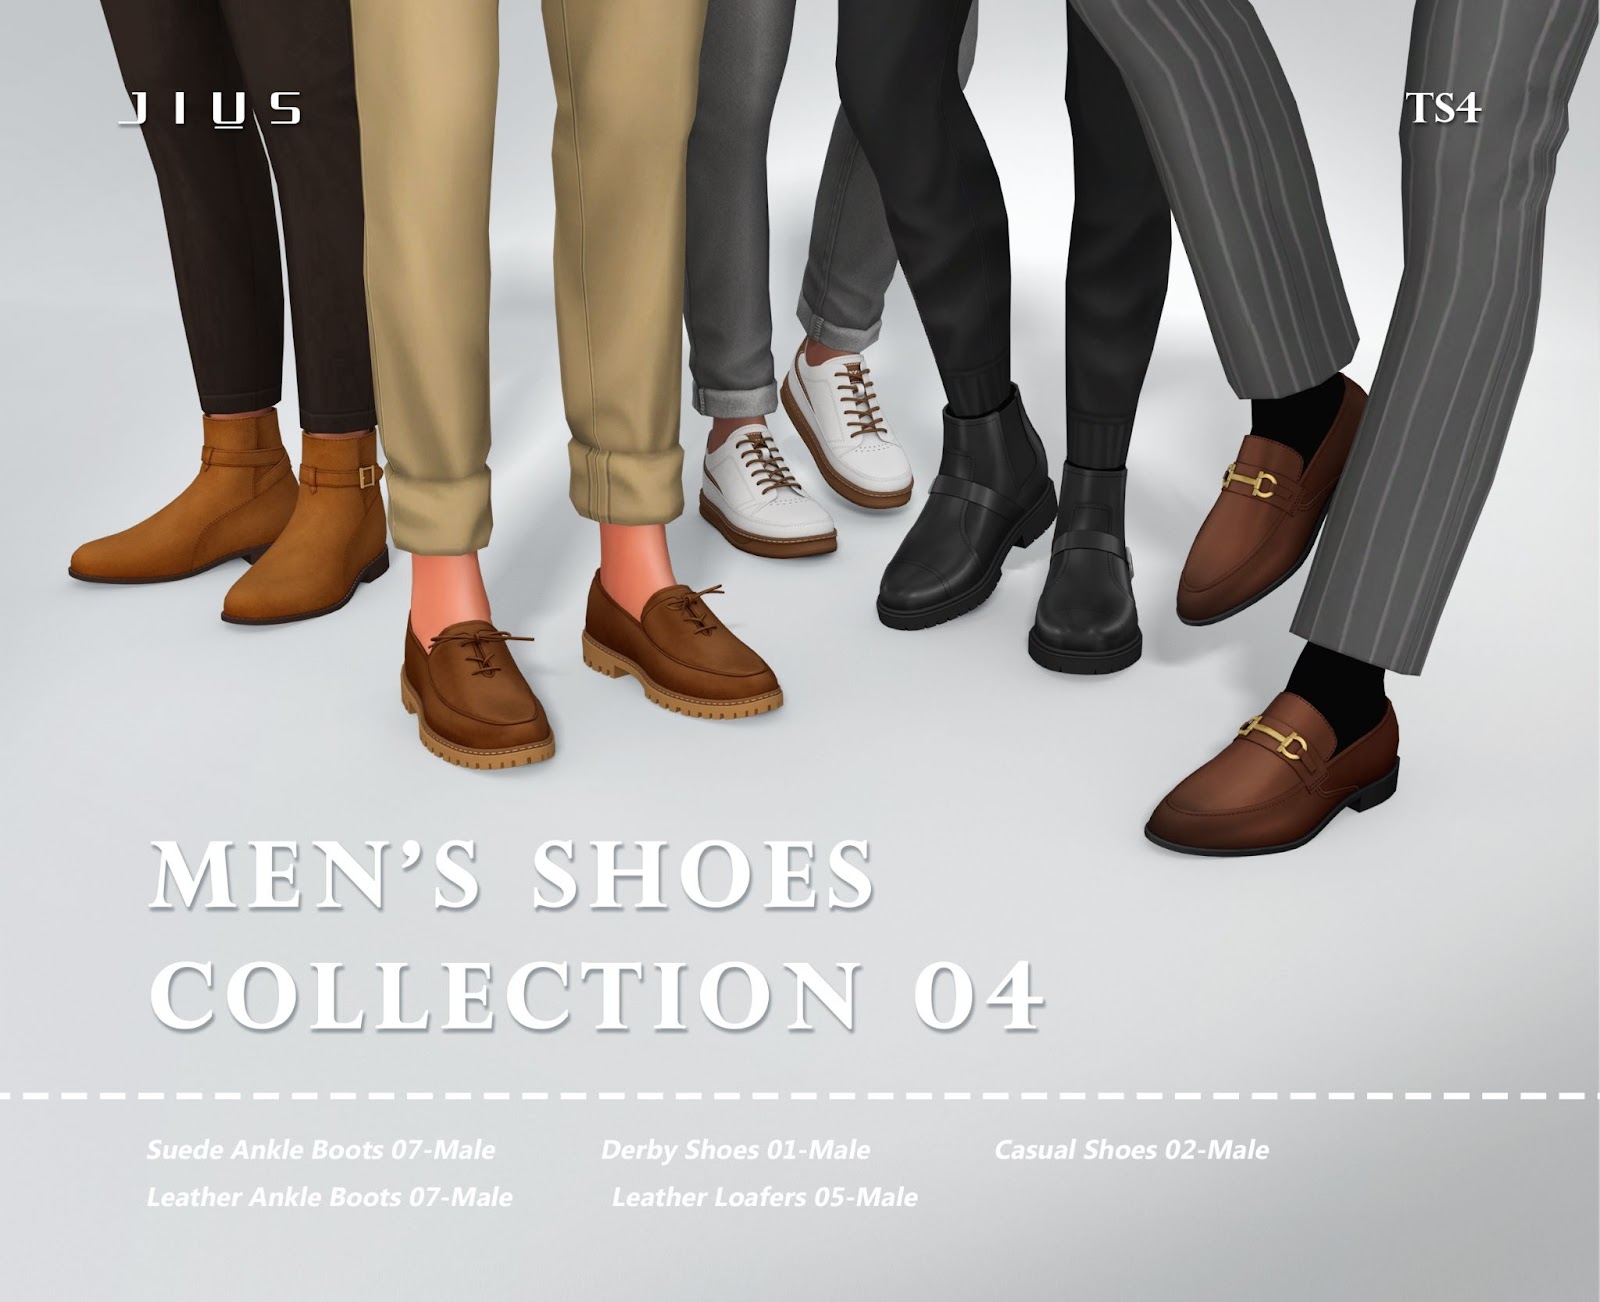 Jius-Sims Male Shoe Collection No. 3